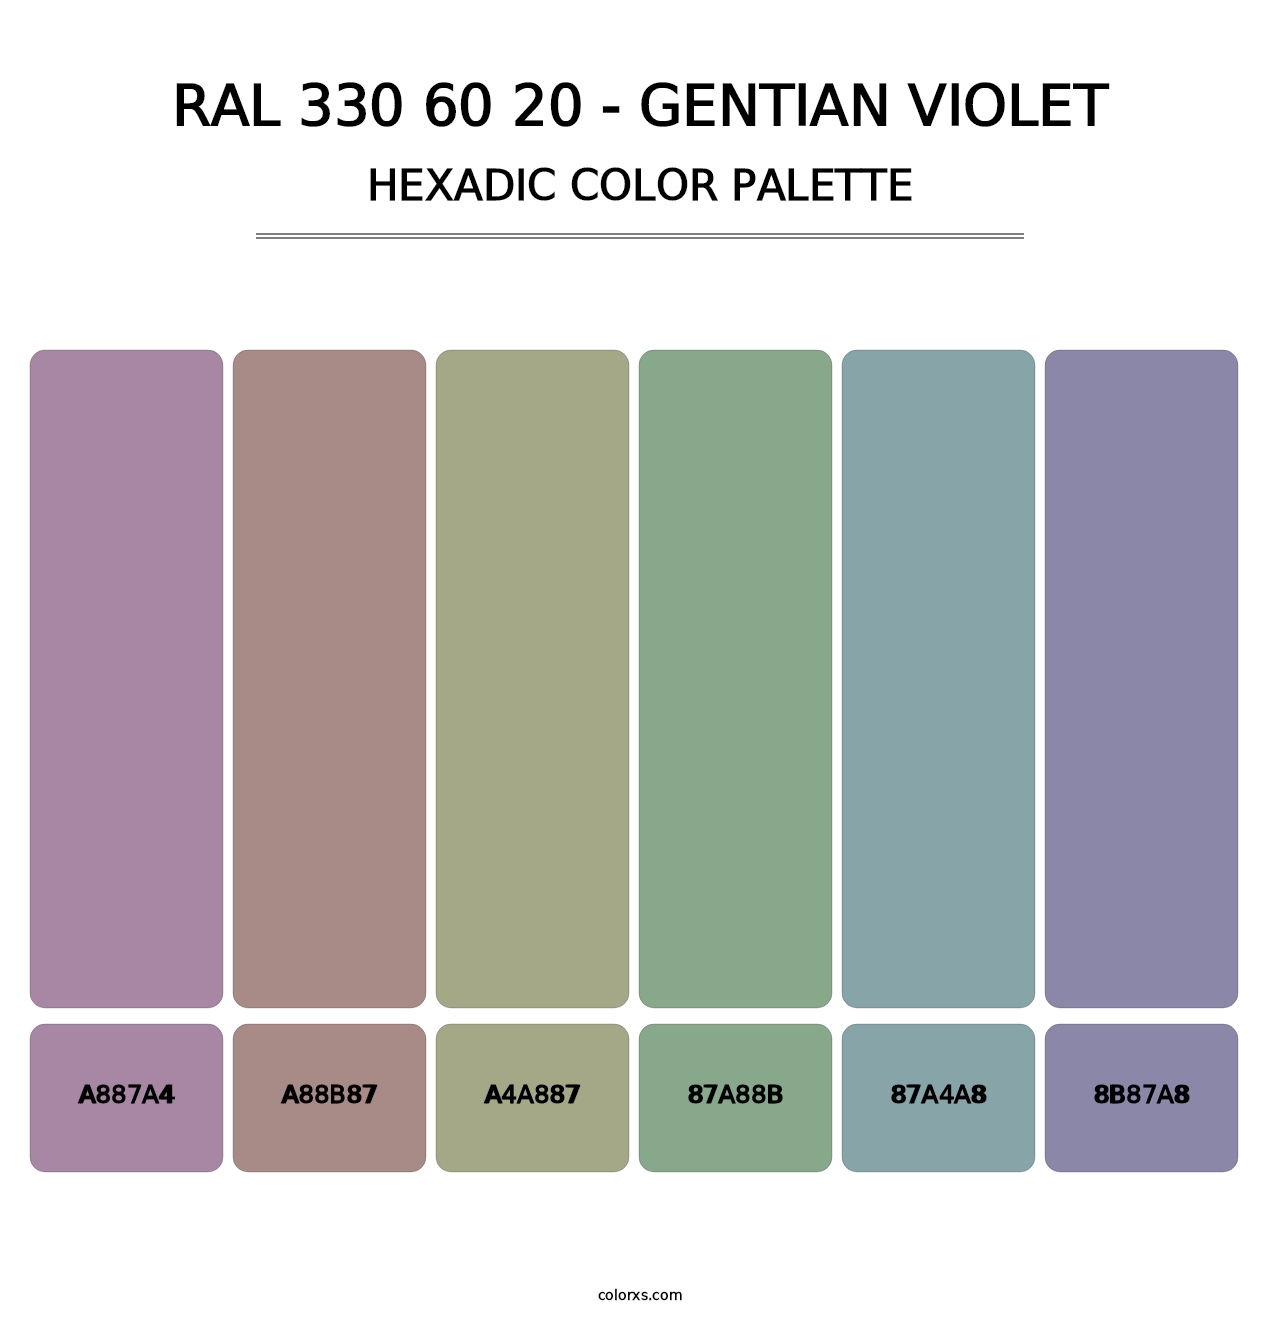 RAL 330 60 20 - Gentian Violet - Hexadic Color Palette